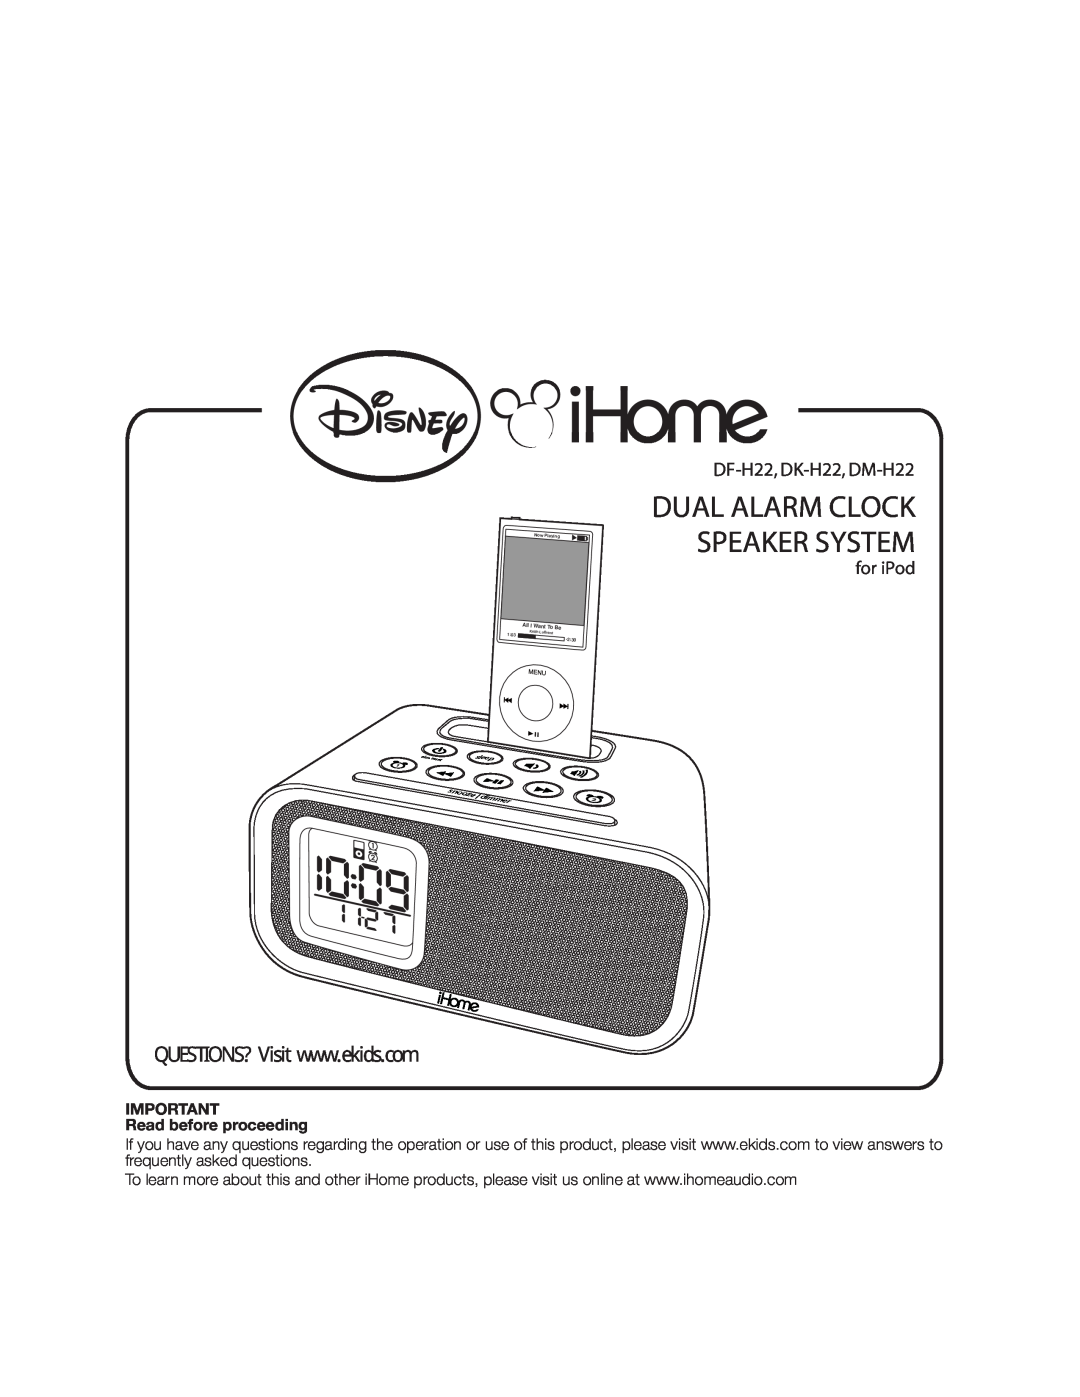 iHome ihome manual Dual Alarm Clock Speaker System, DF-H22, DK-H22, DM-H22, for iPod 